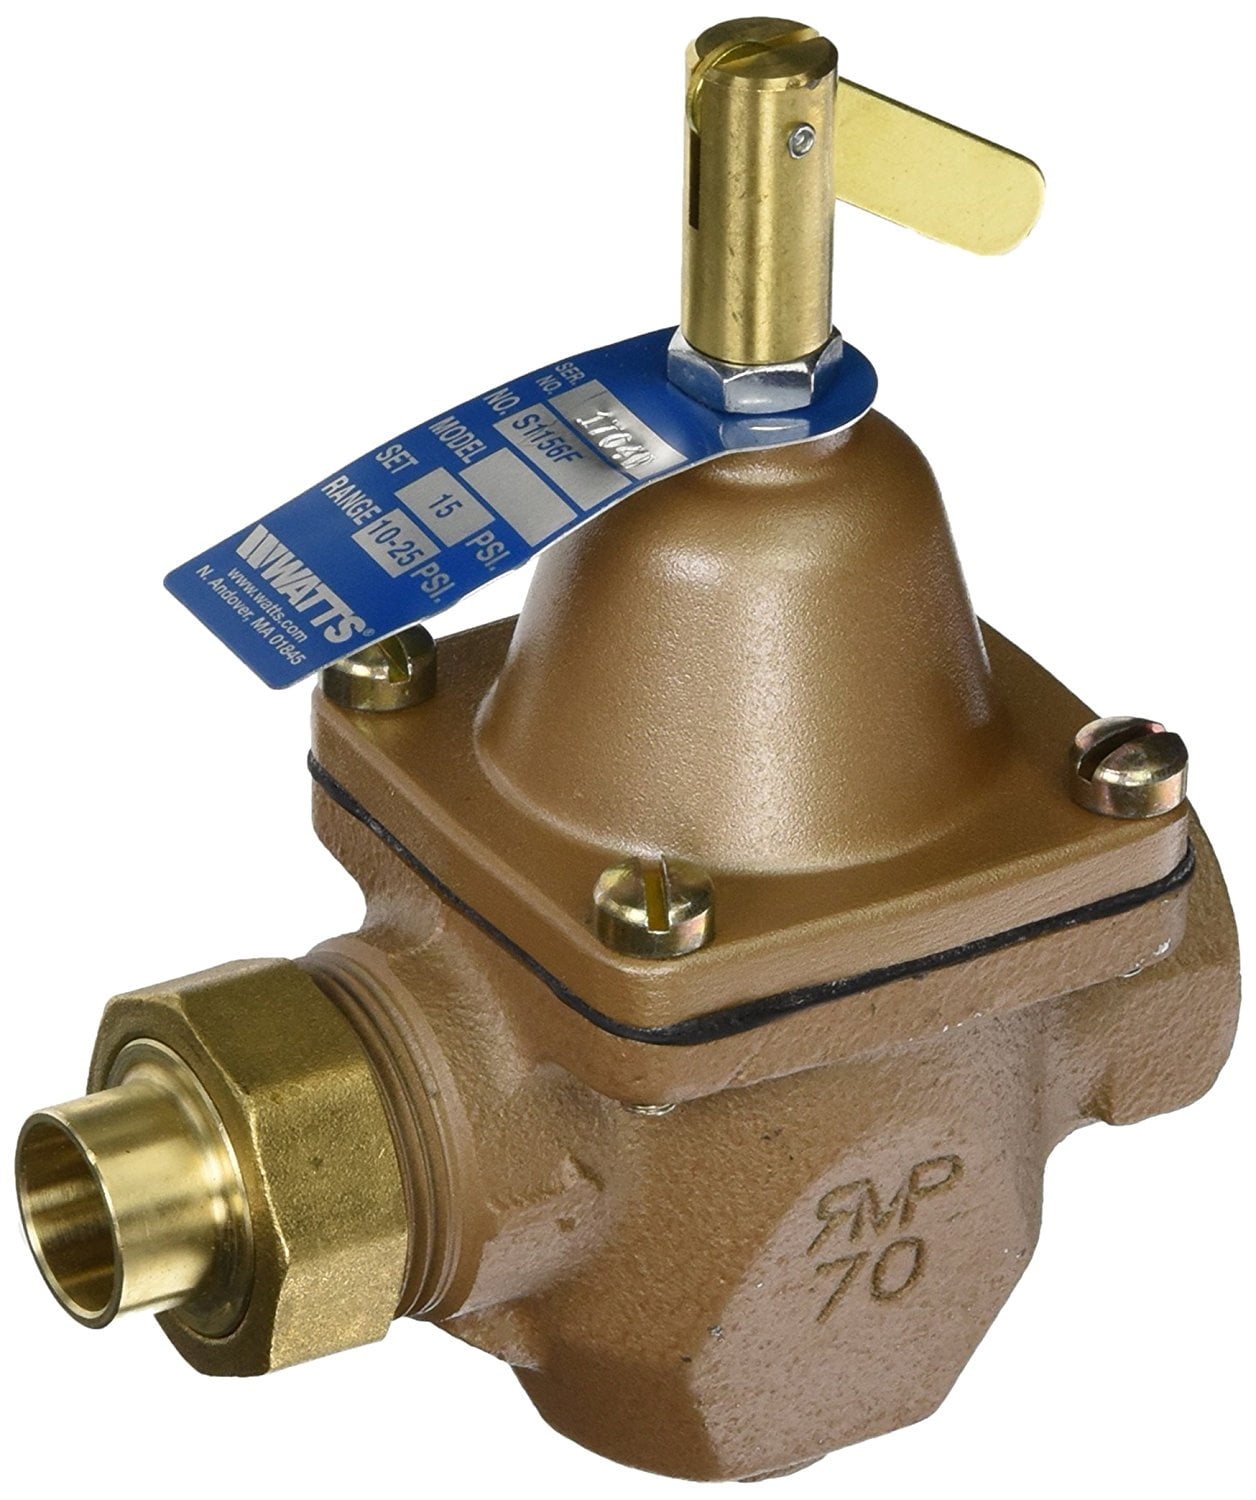 Watts SB1156F Boiler Feed Water Pressure Regulator for sale online 